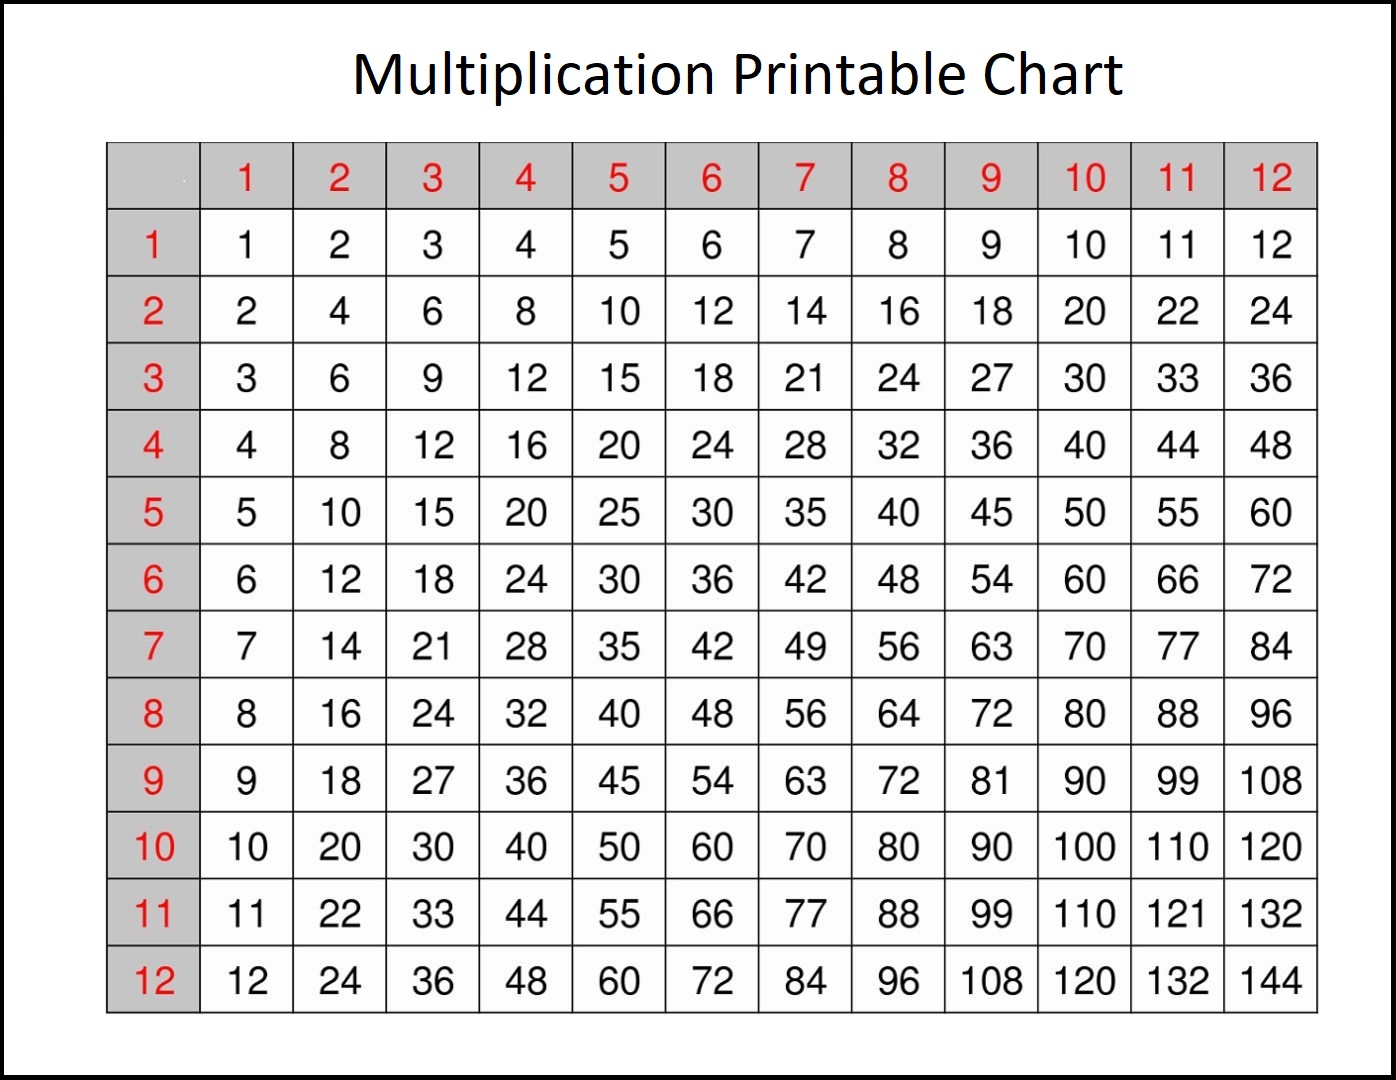 Multiplication Printable Chart